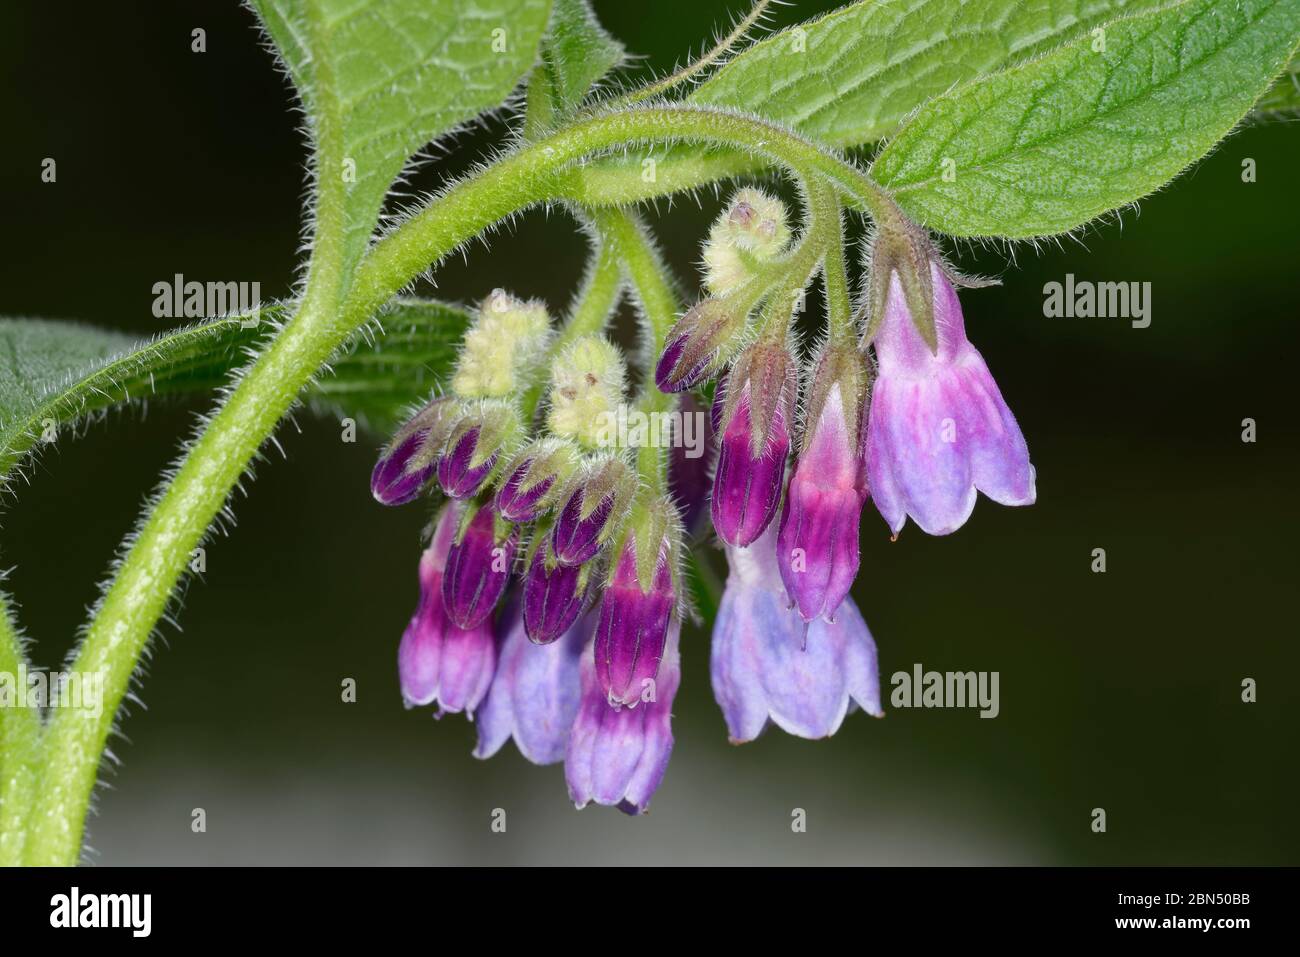 Russian Comfrey - Symphytum x uplandicum  Closeup of coiled flowers Stock Photo